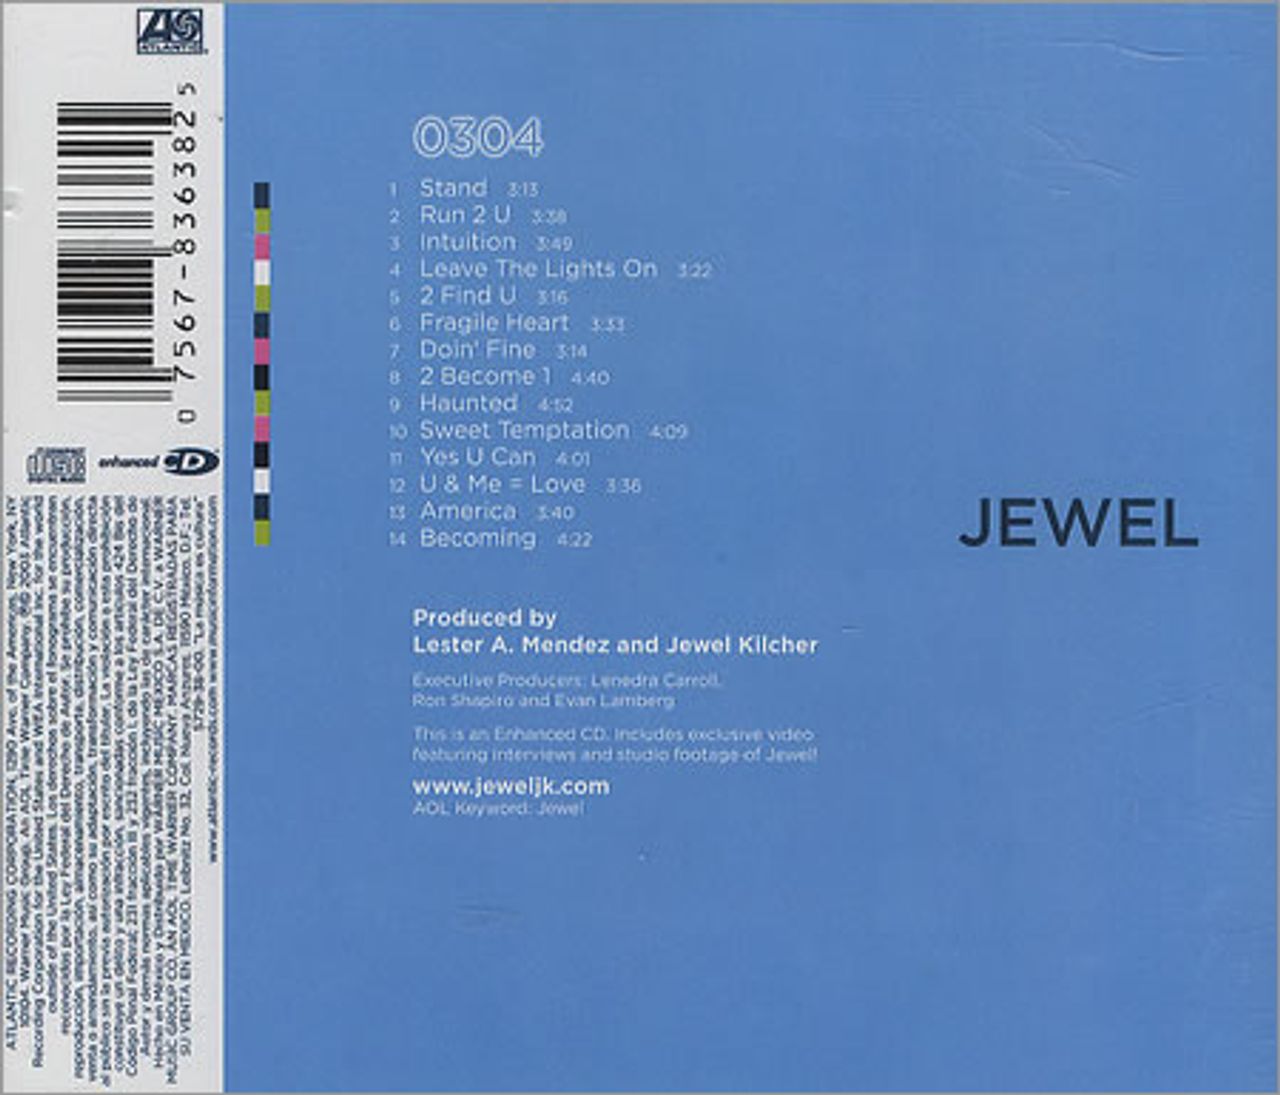 Jewel - 0304 Lyrics and Tracklist